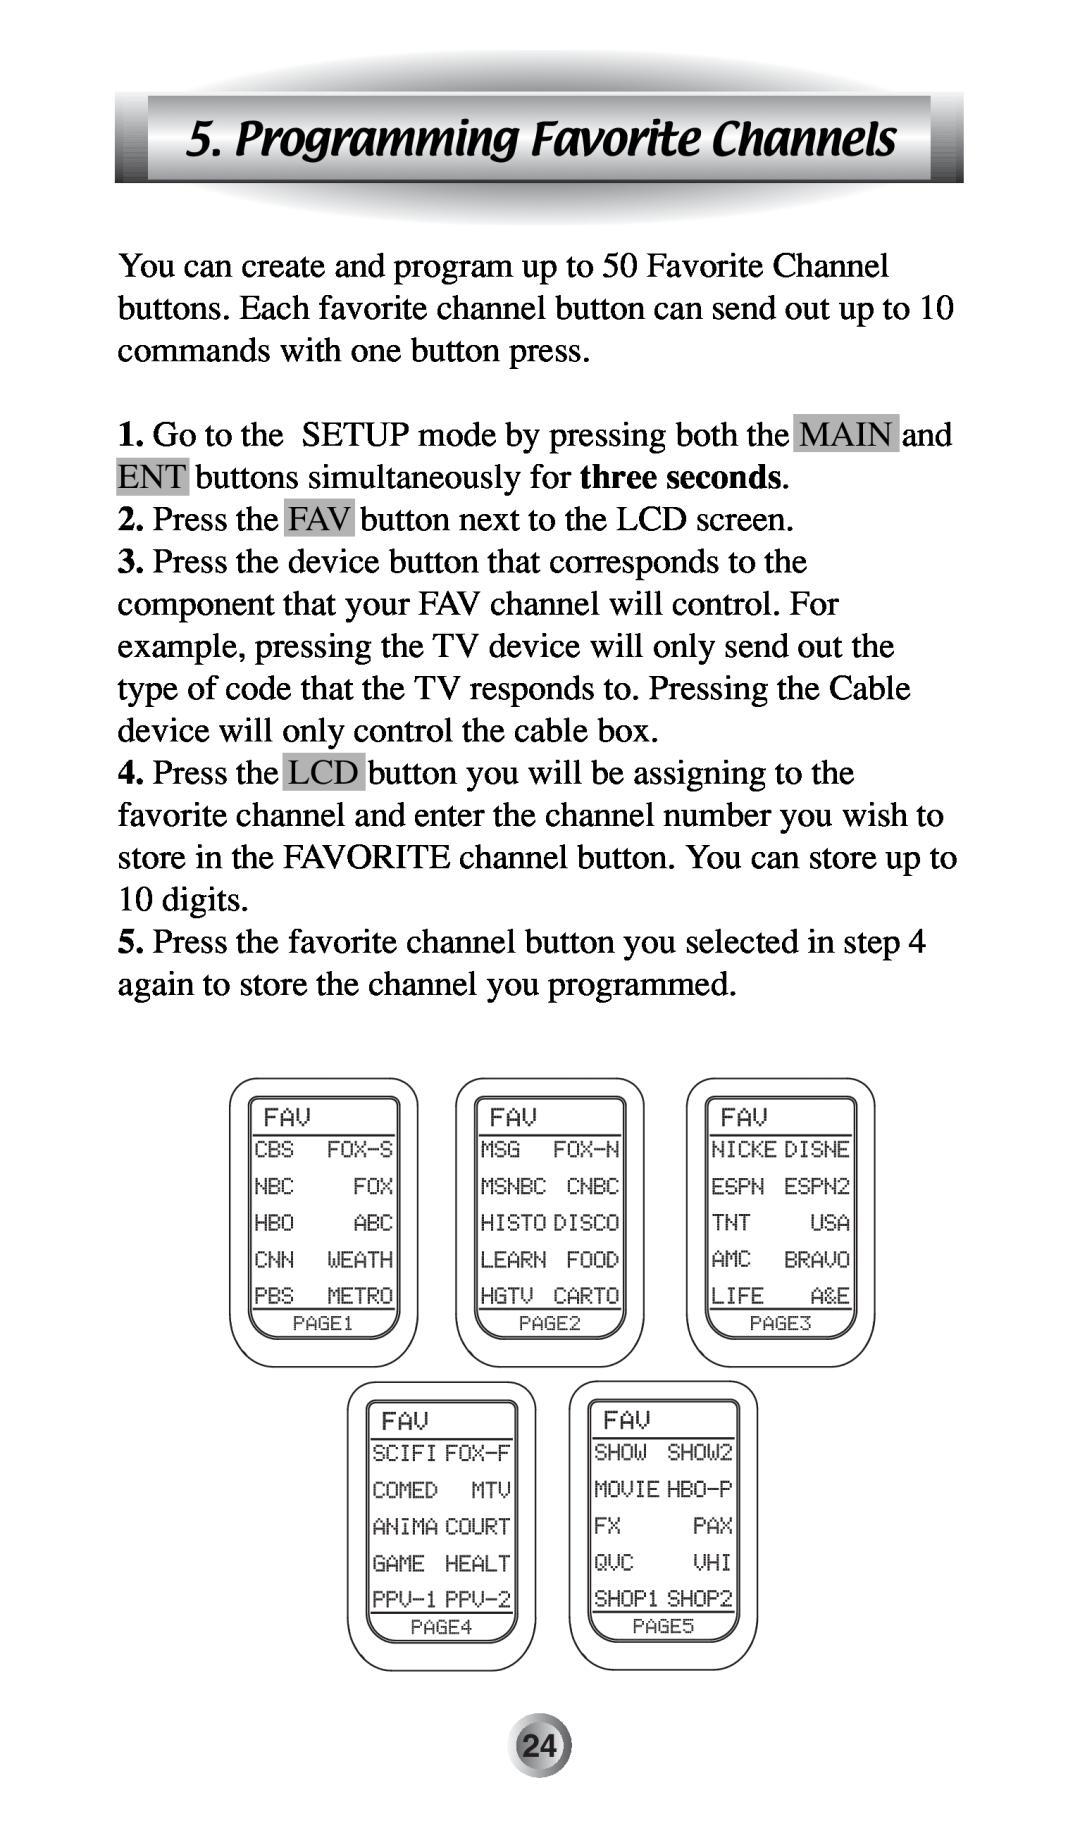 Radio Shack MX-500TM manual Programming Favorite Channels 